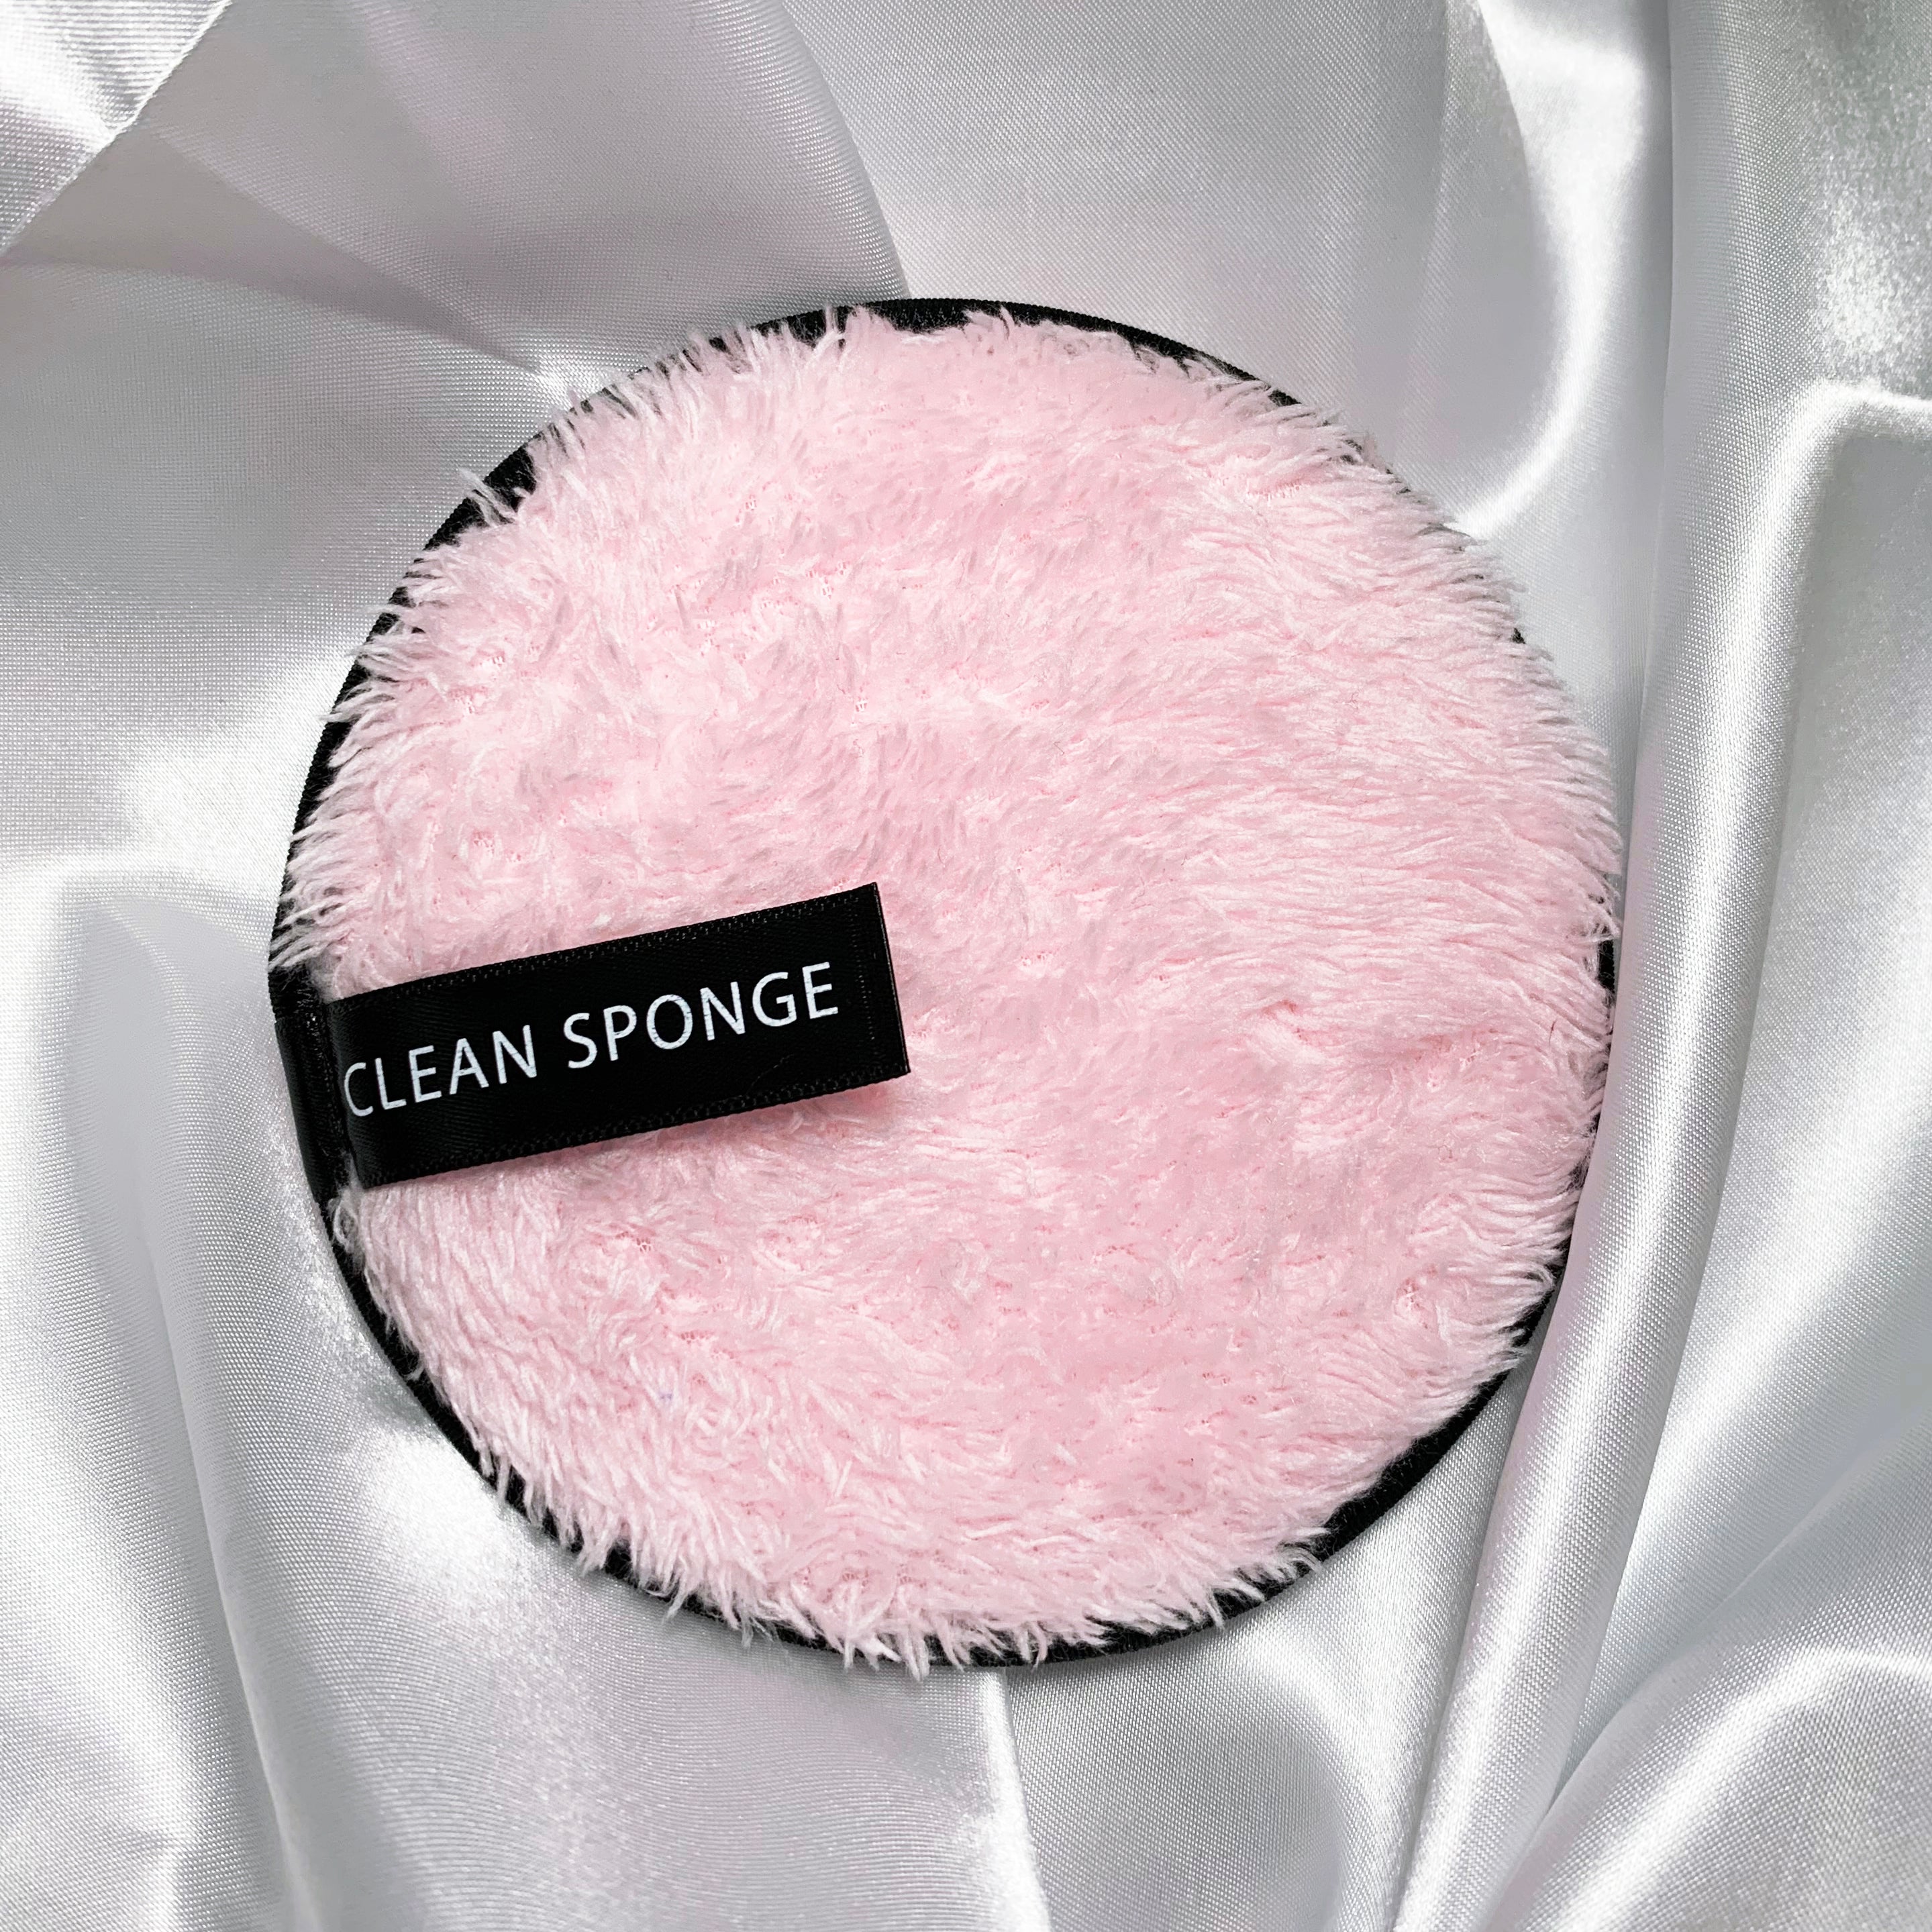 Magic Makeup Eraser - Cleansing Sponge